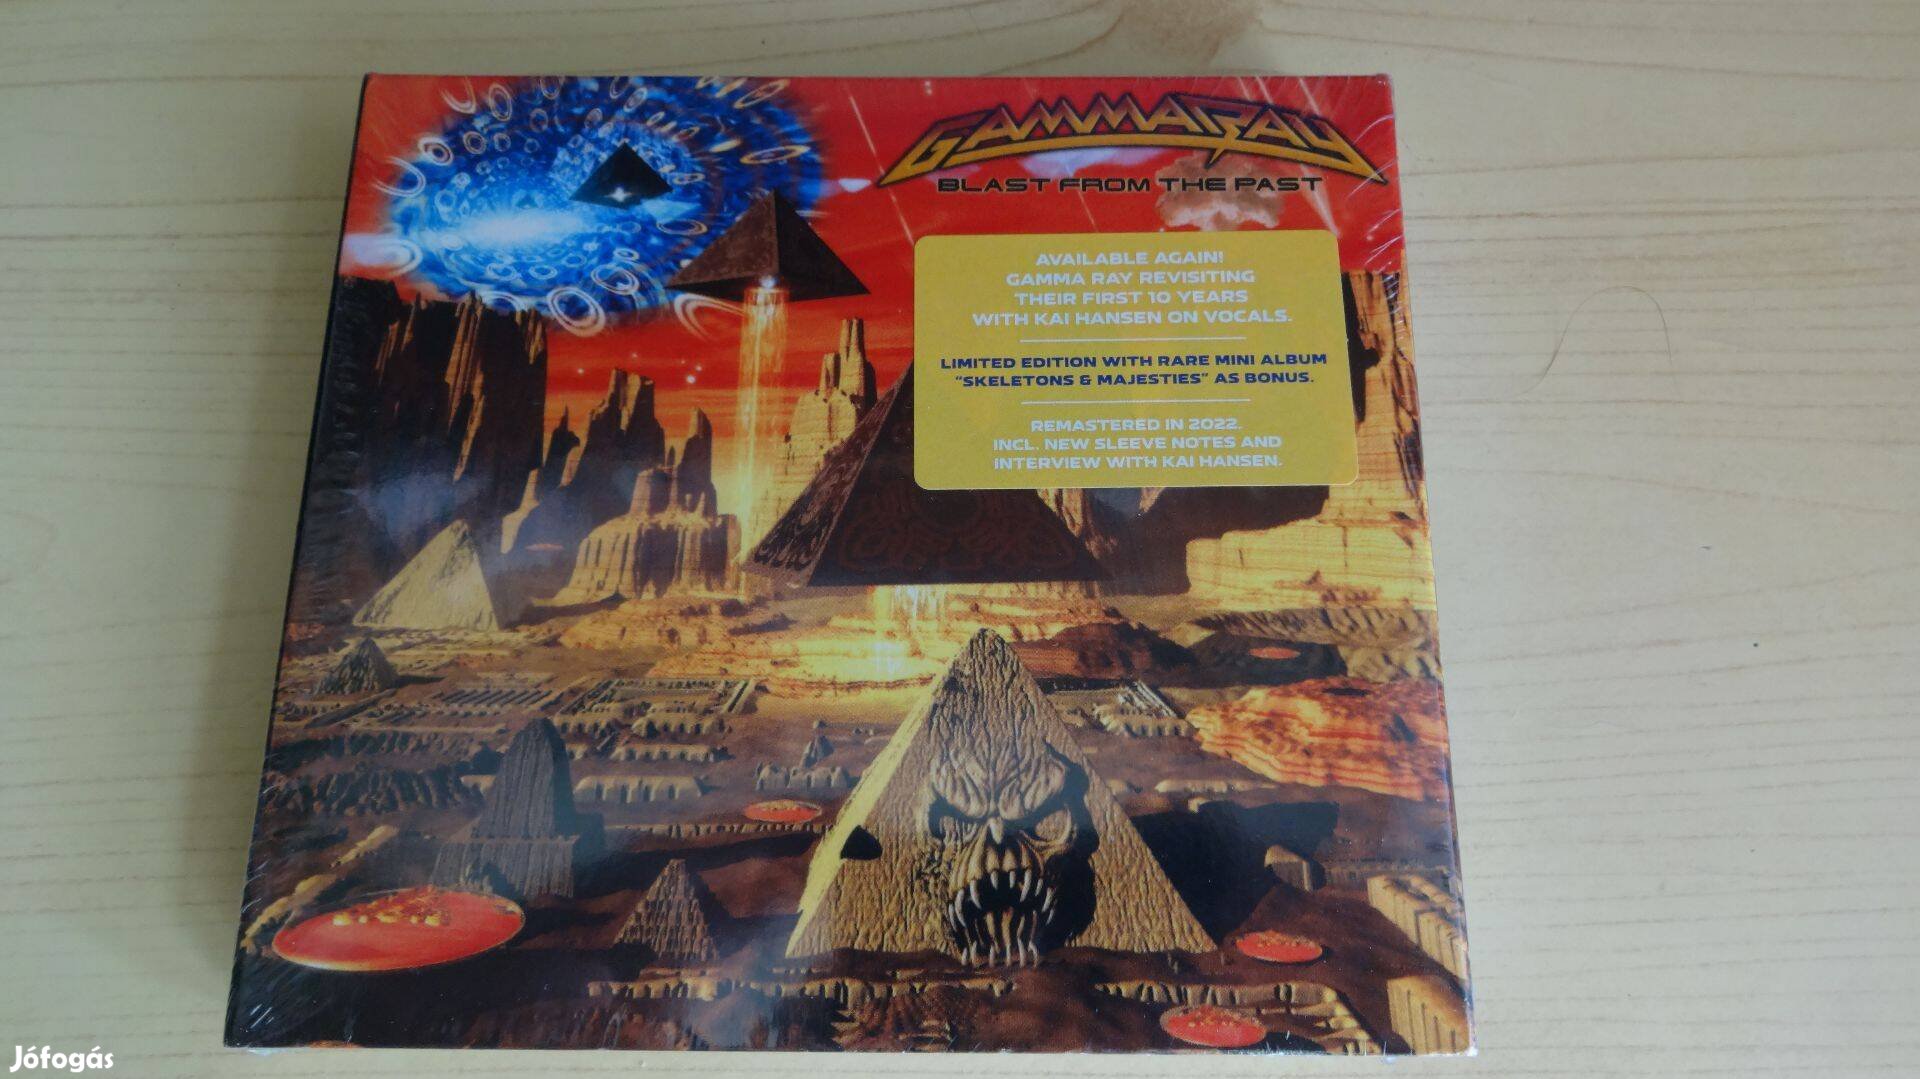 Gamma Ray - Blast From The Past (Bontatlan;3CD)